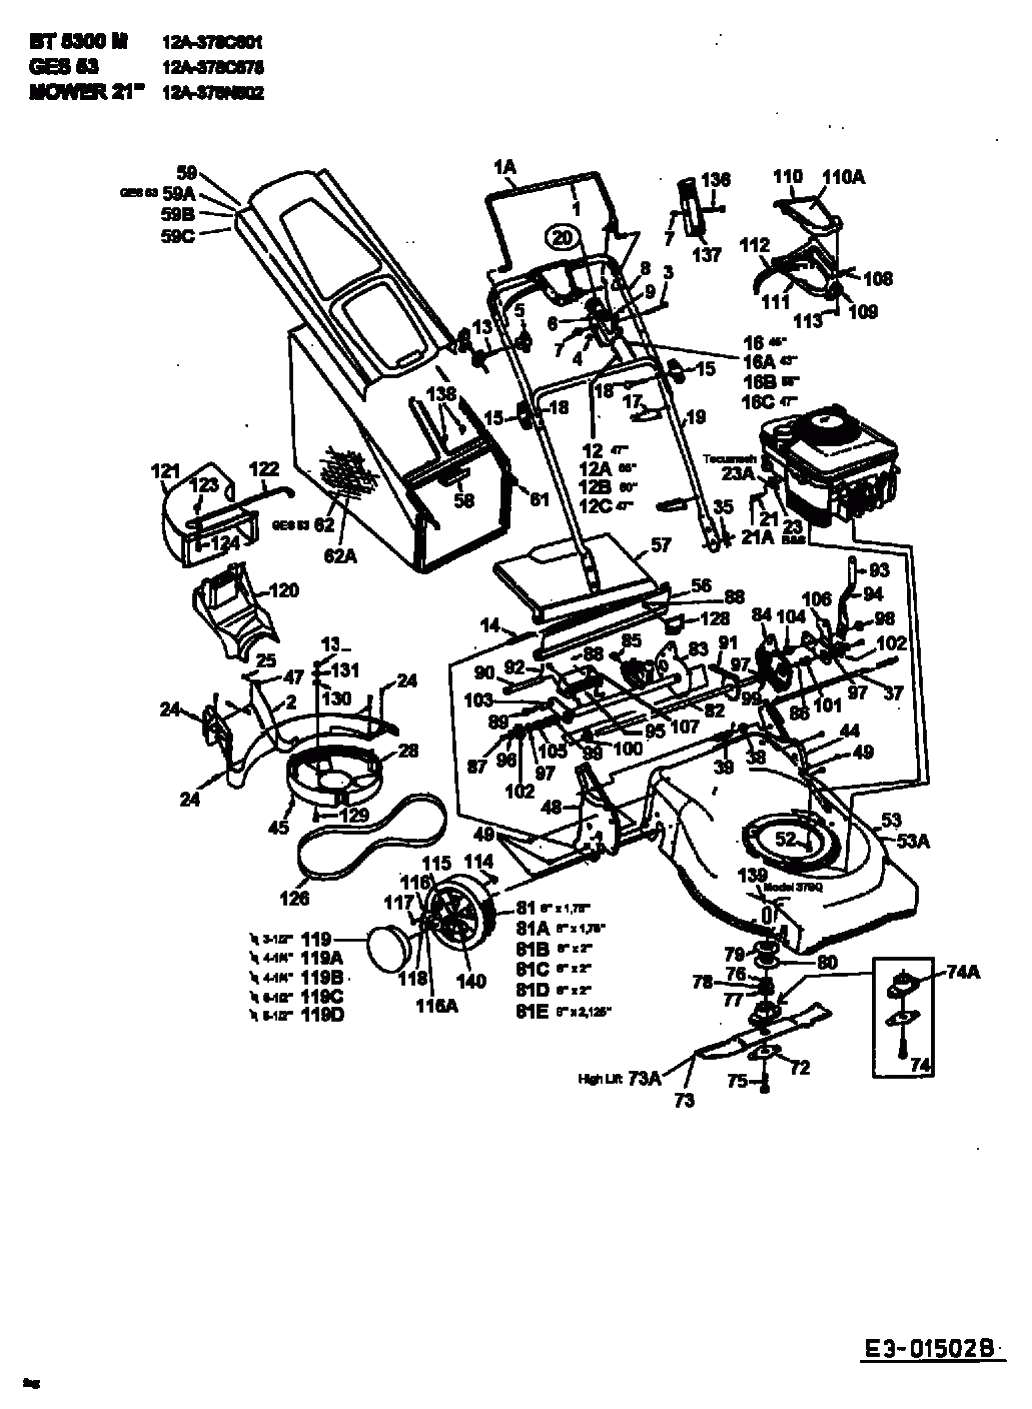 MTD Артикул 12A-378C678 (год выпуска 2001). Основная деталировка